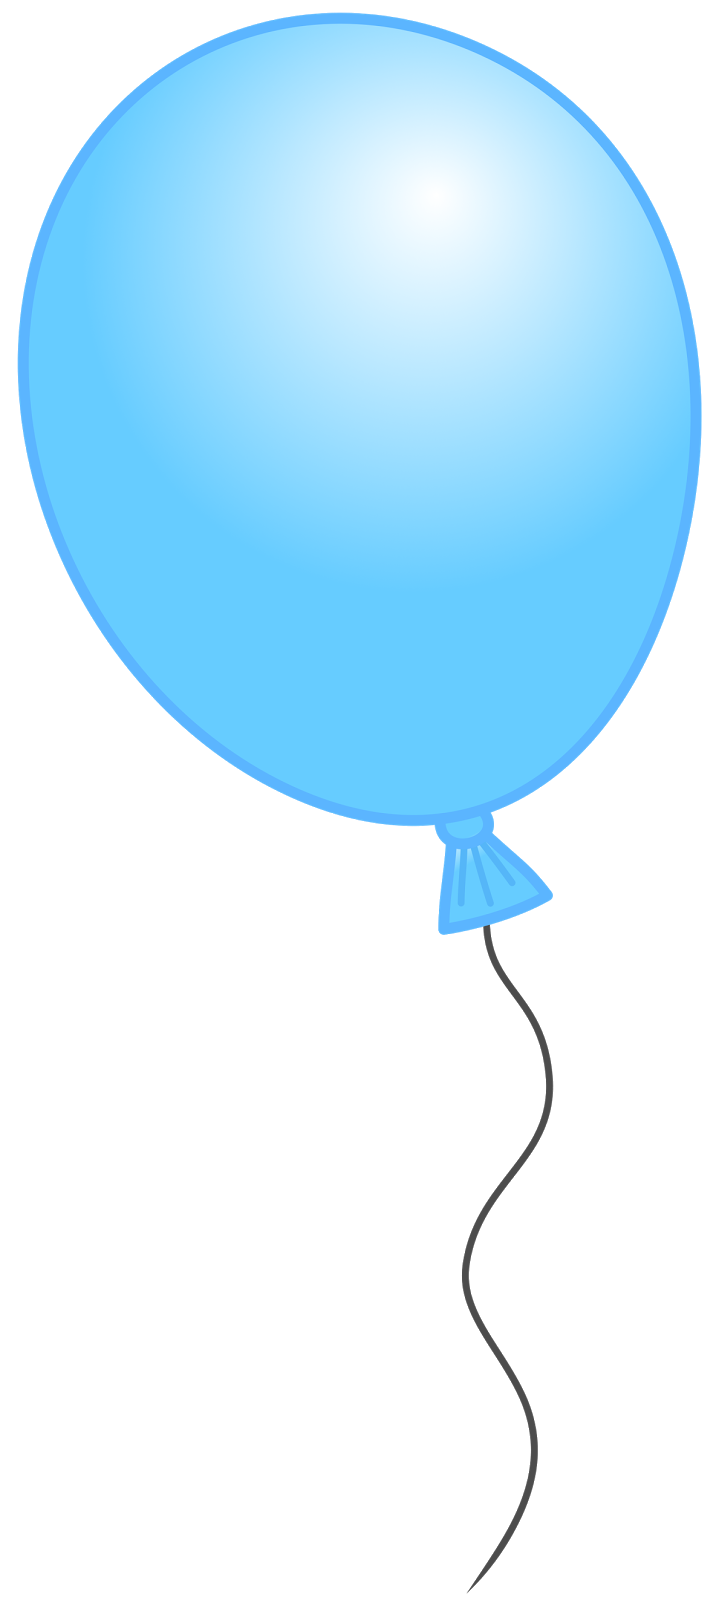 Download Blue Single Balloon Free Transparent Image HQ HQ PNG Image |  FreePNGImg